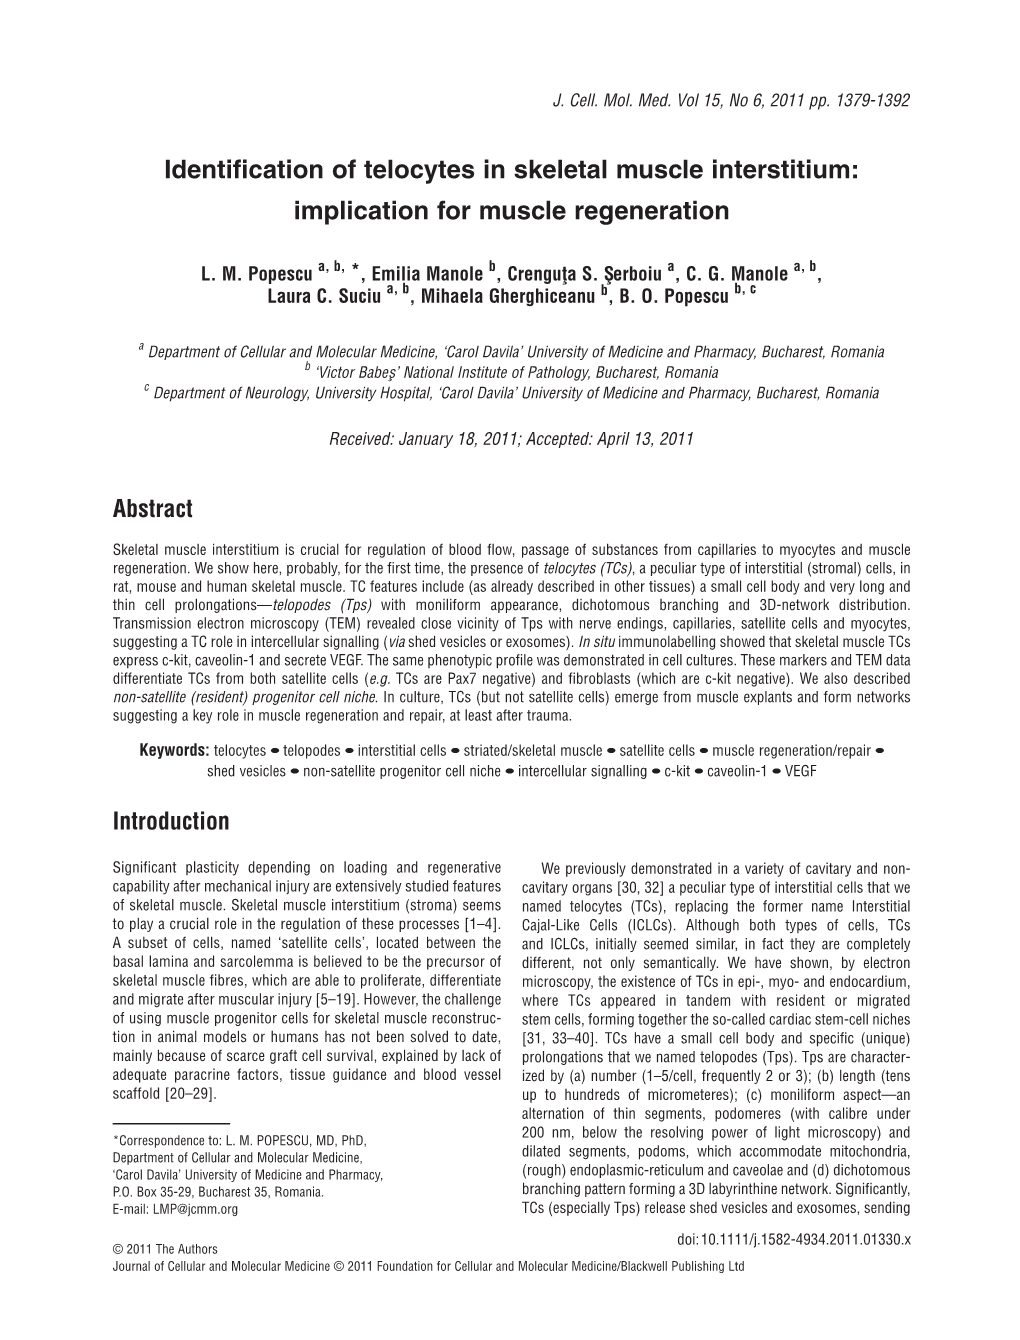 Identification of Telocytes in Skeletal Muscle Interstitium: Implication for Muscle Regeneration